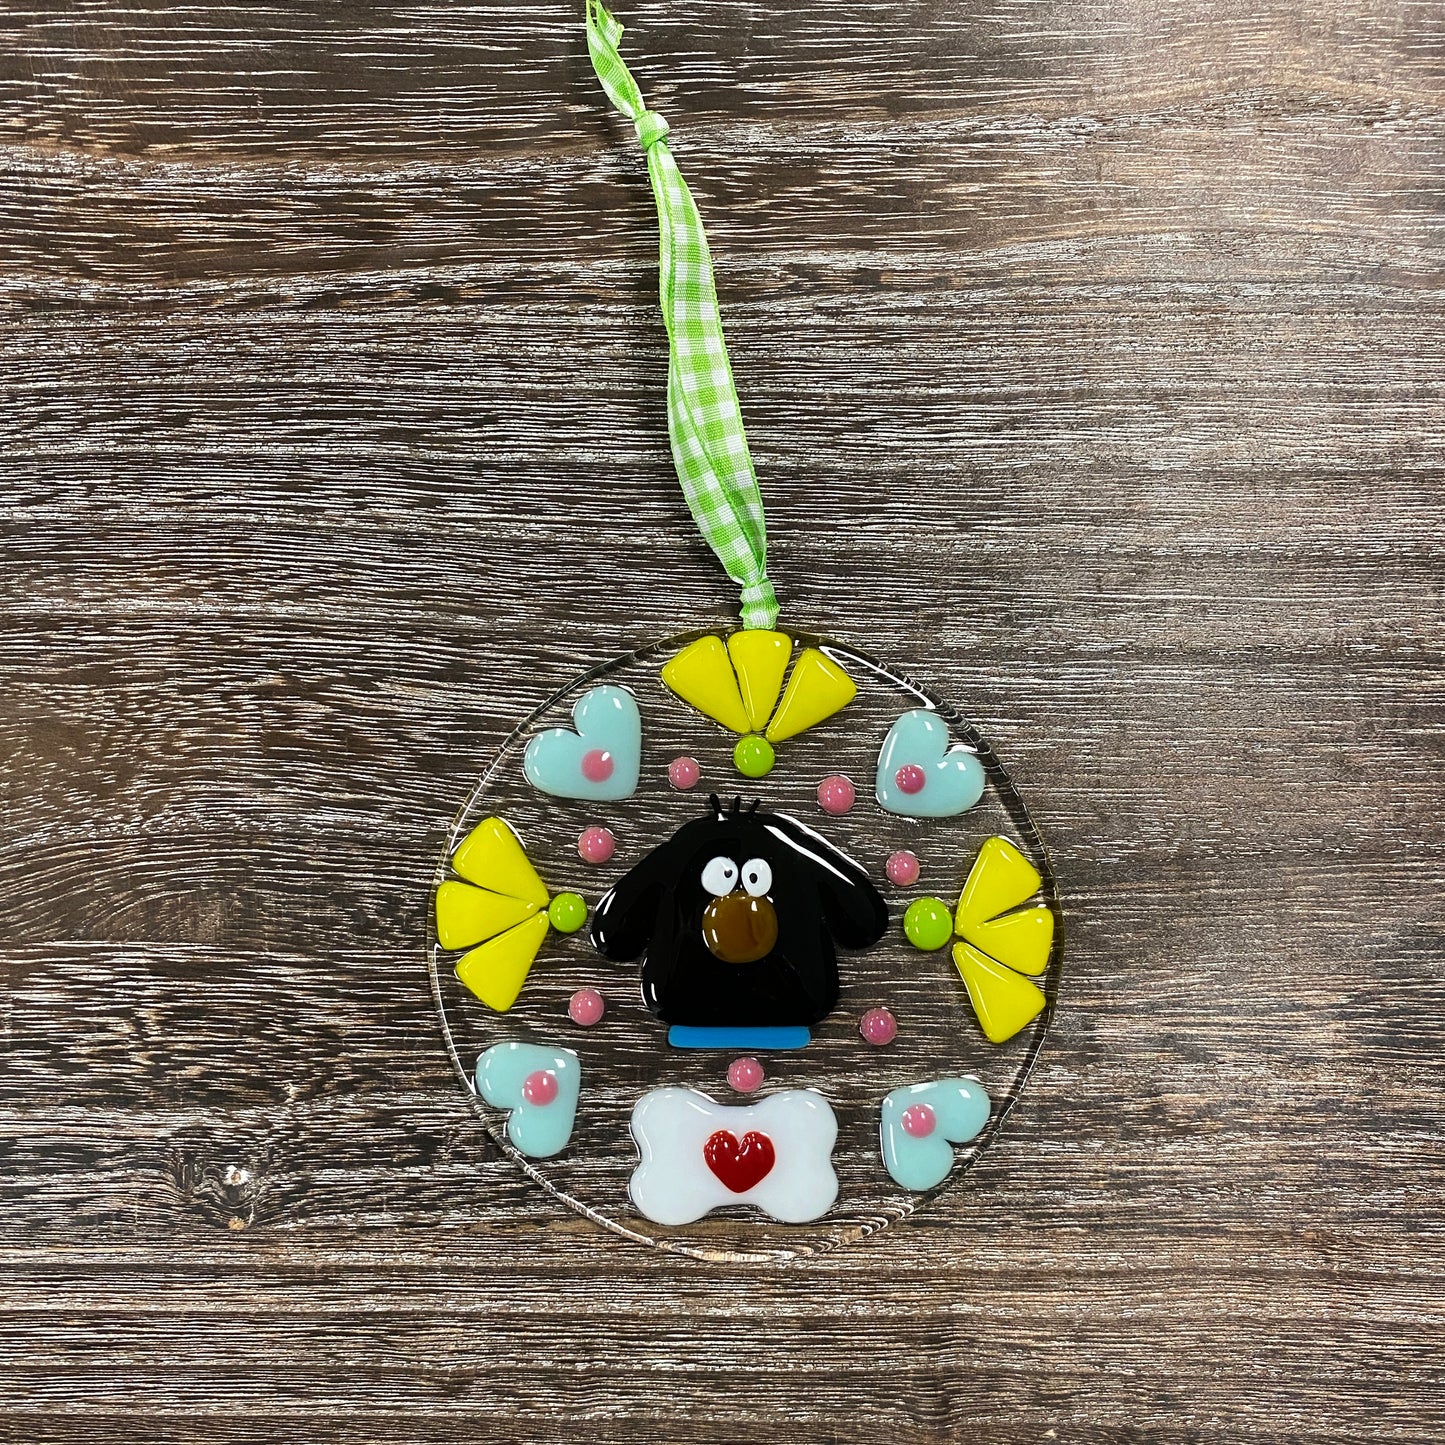 Fused Glass Suncatcher Ornament - Mandala with Dog